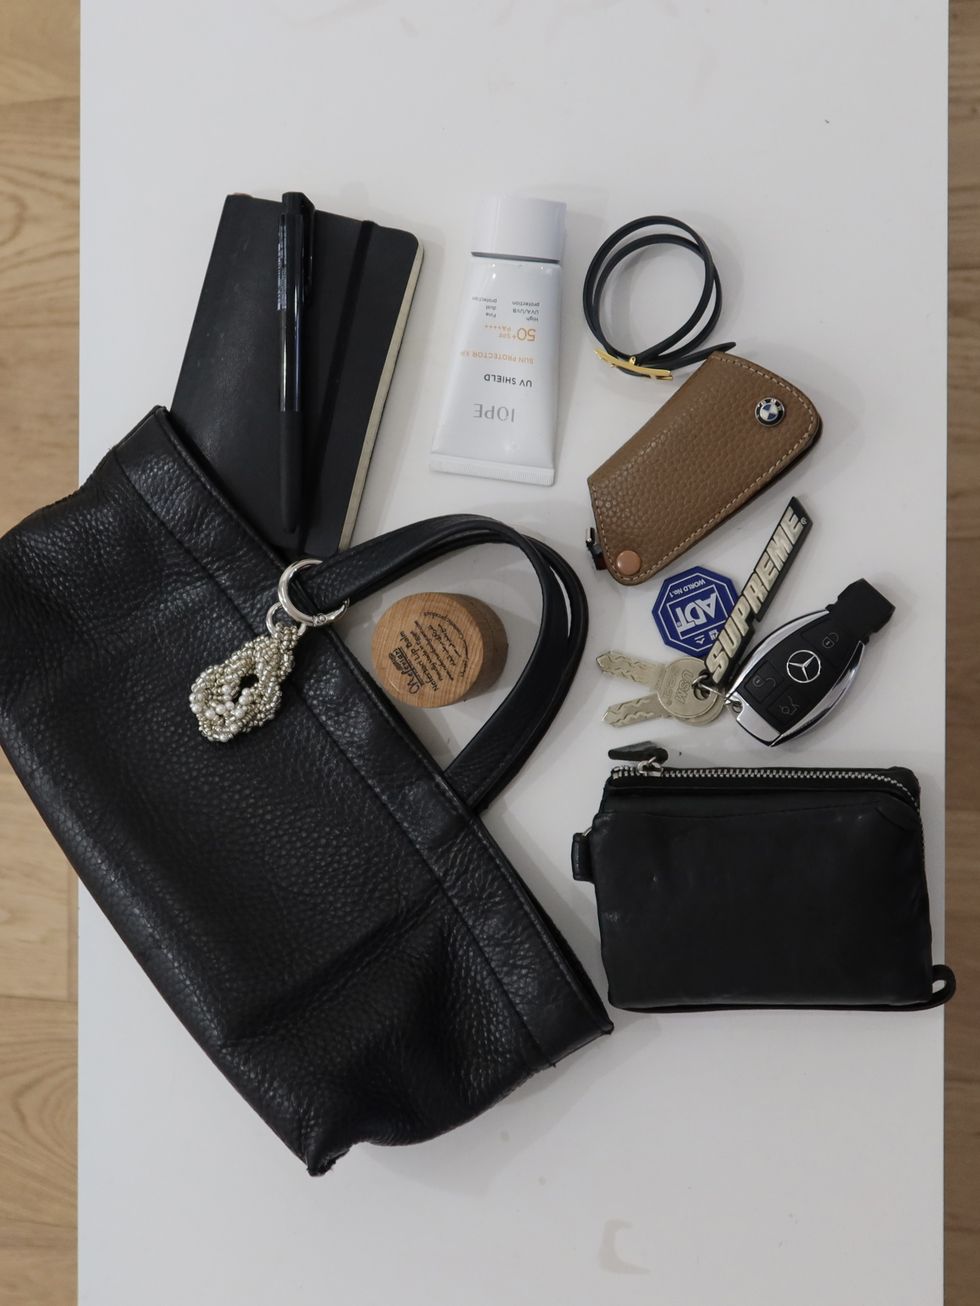 a purse and keys on a table